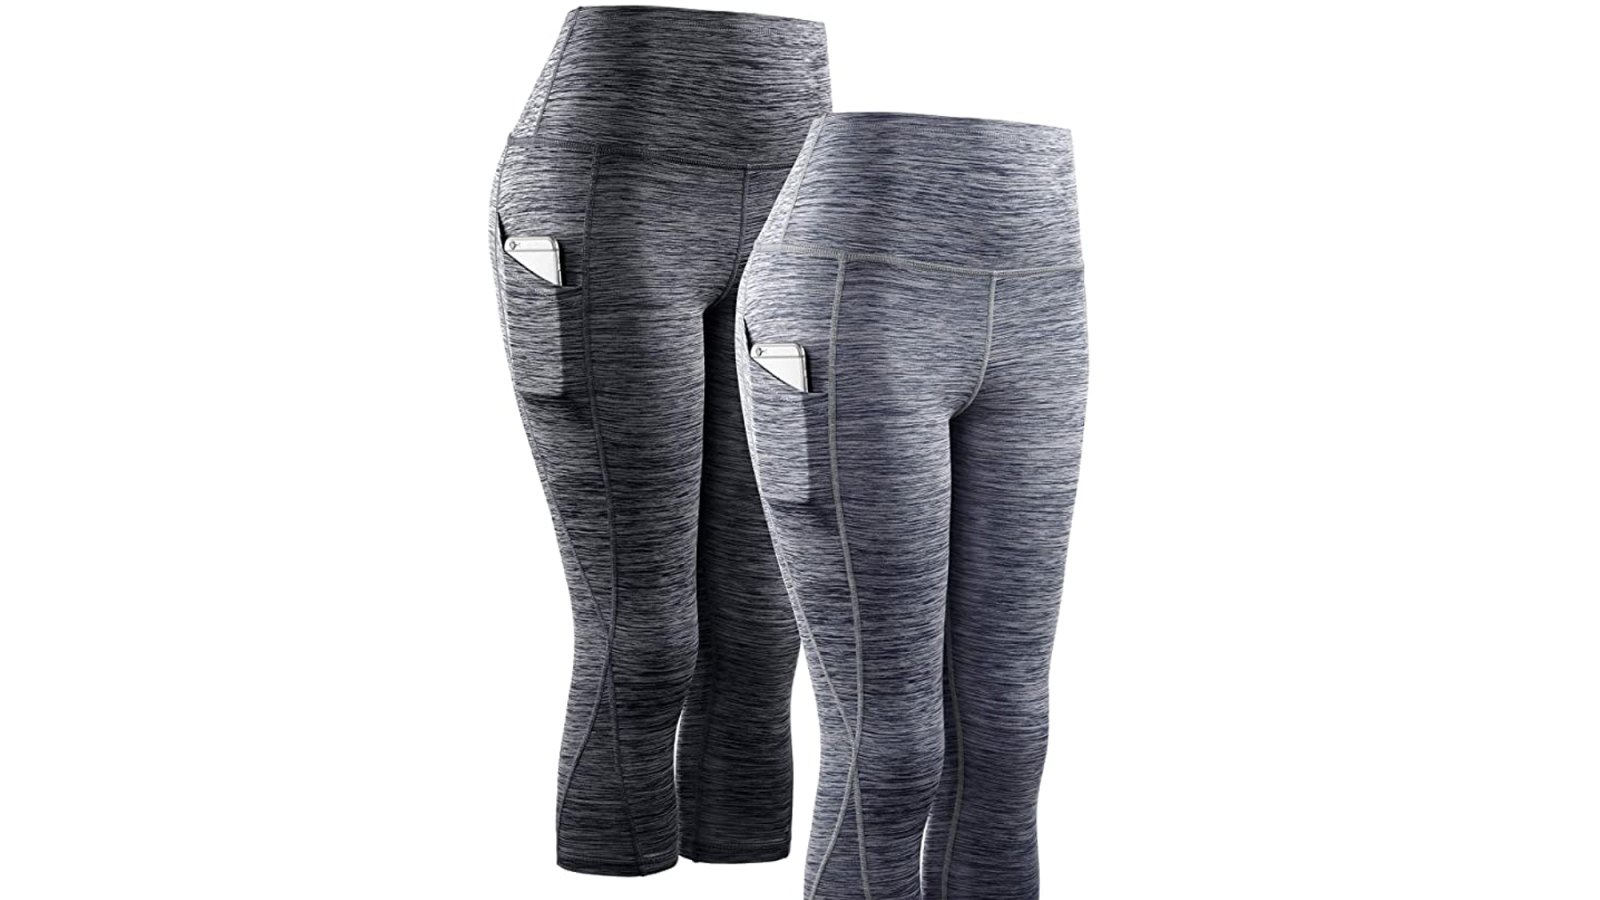 Comfy Yoga Pants - Workout Capris - High Waist Workout Leggings